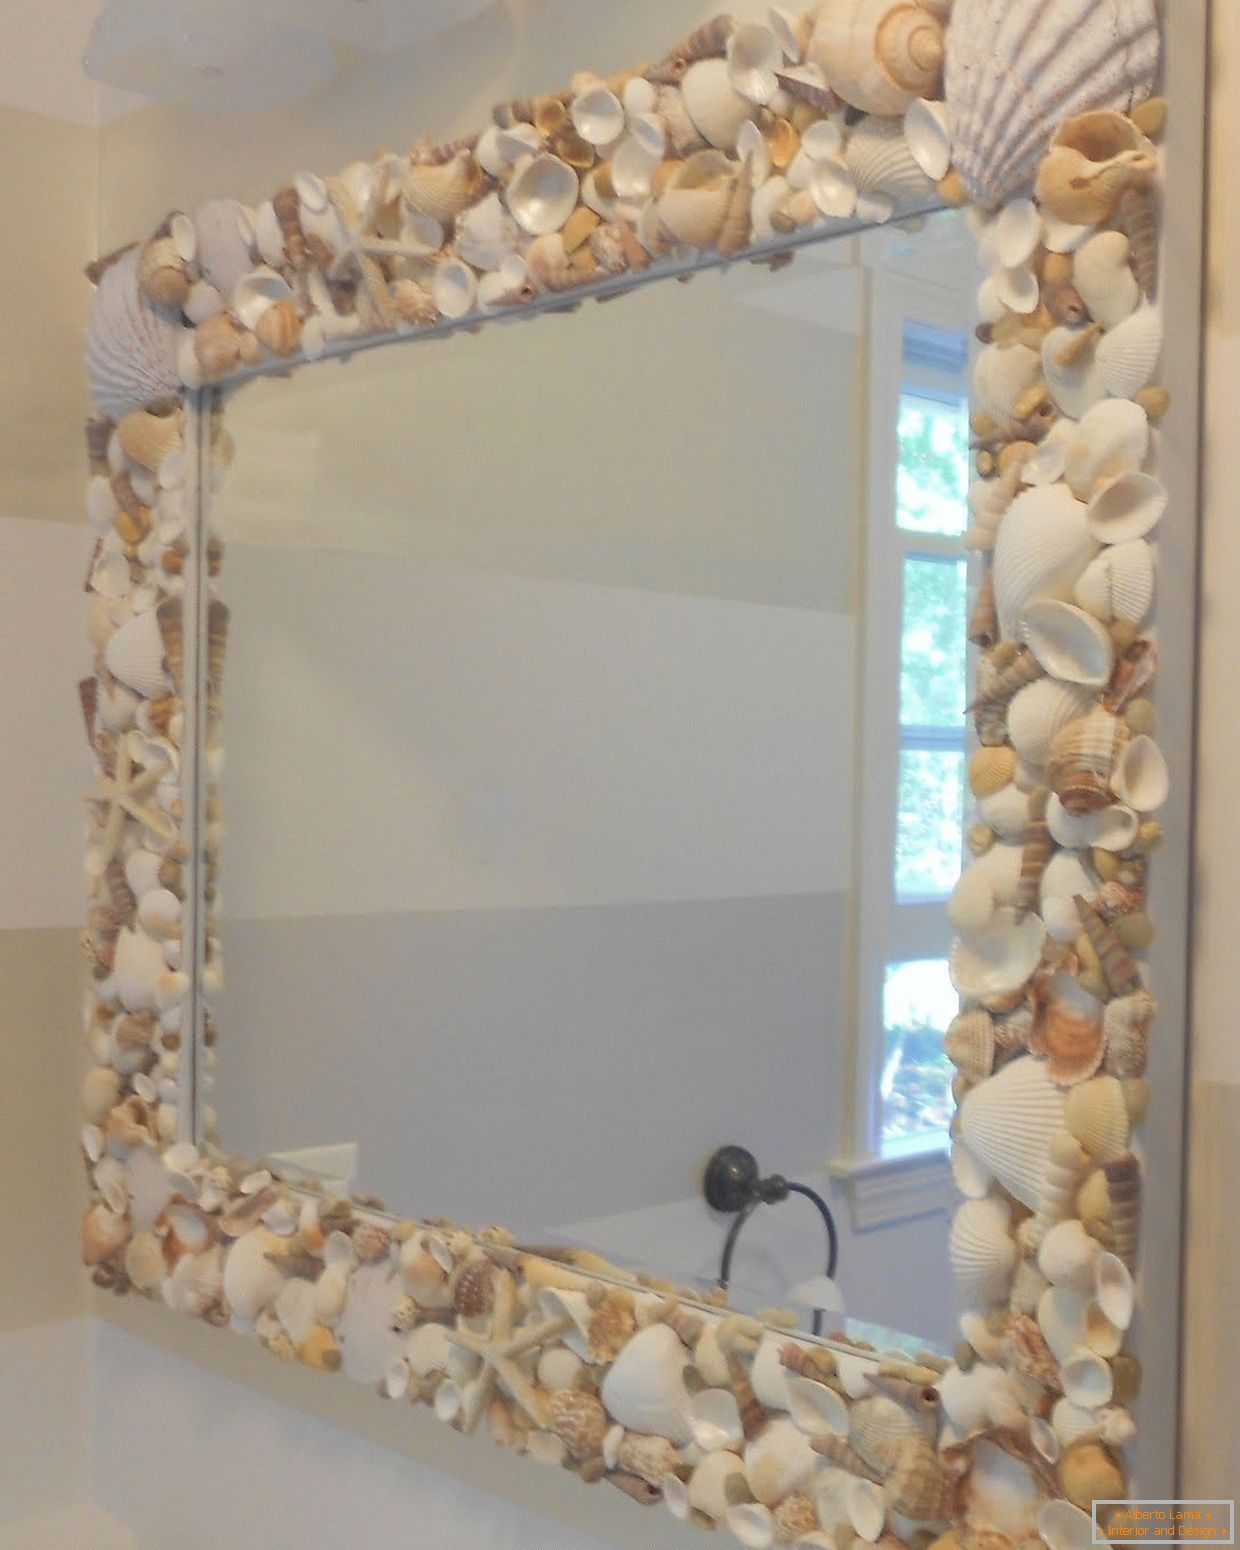 Shells around the mirror